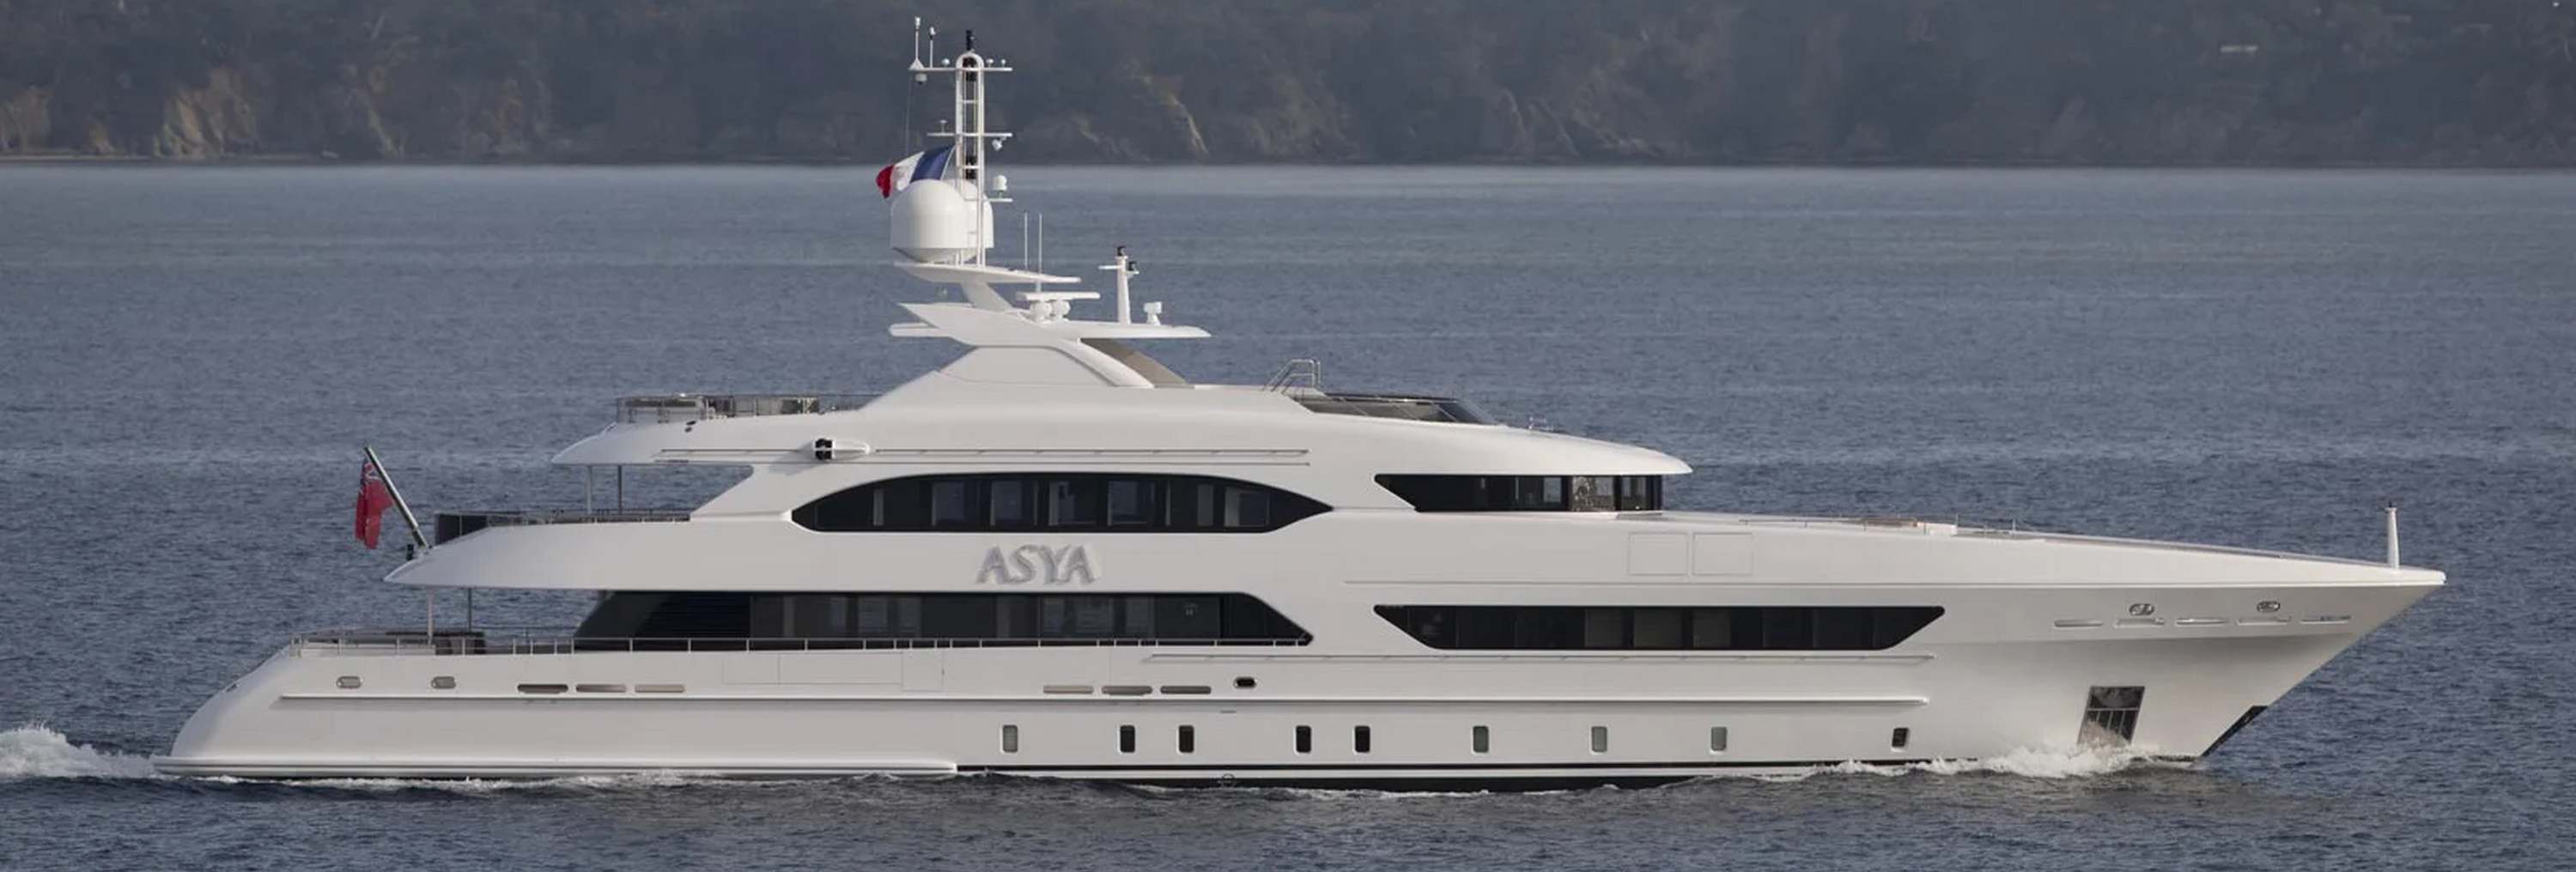 ASYA : New Motor Yacht For Sale